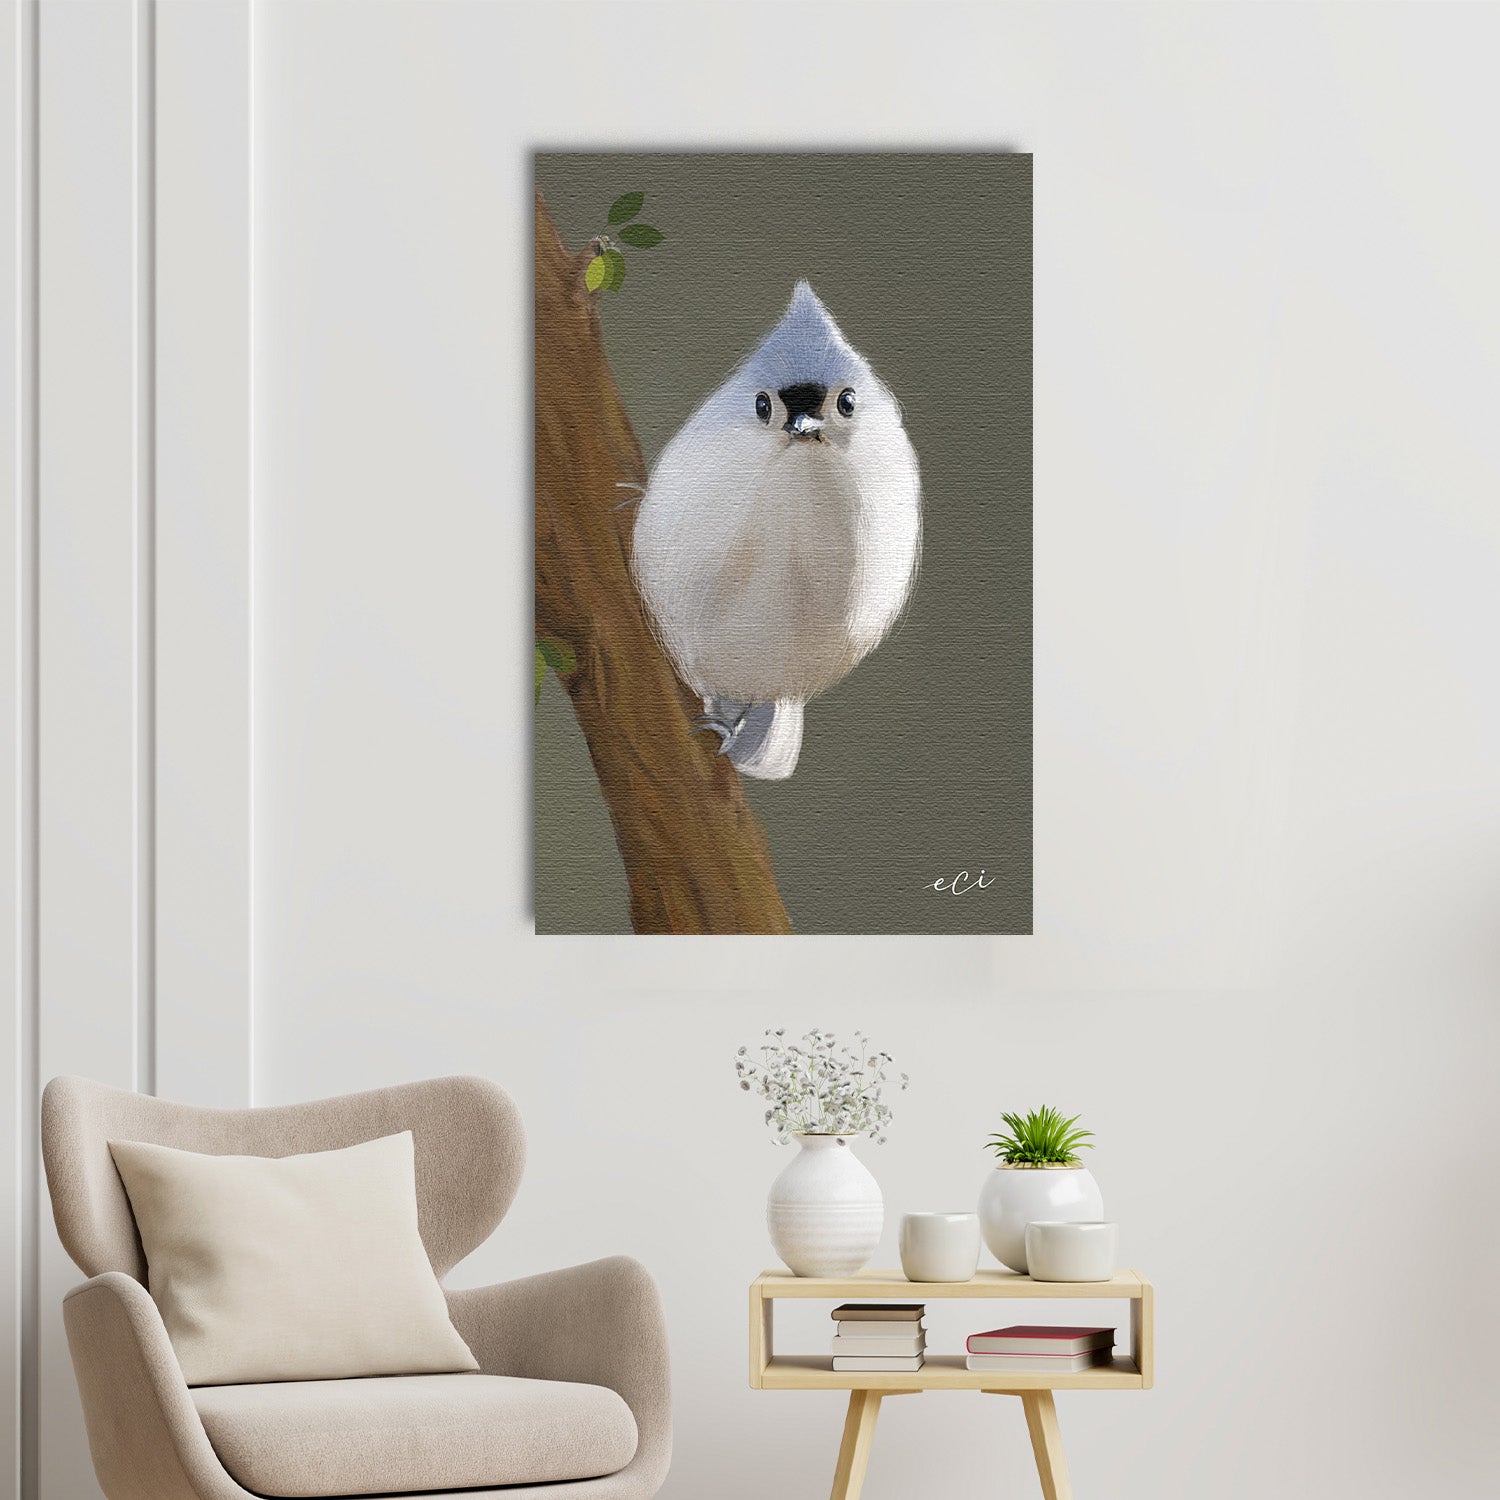 Topical Bird Original Design Canvas Printed Wall Painting